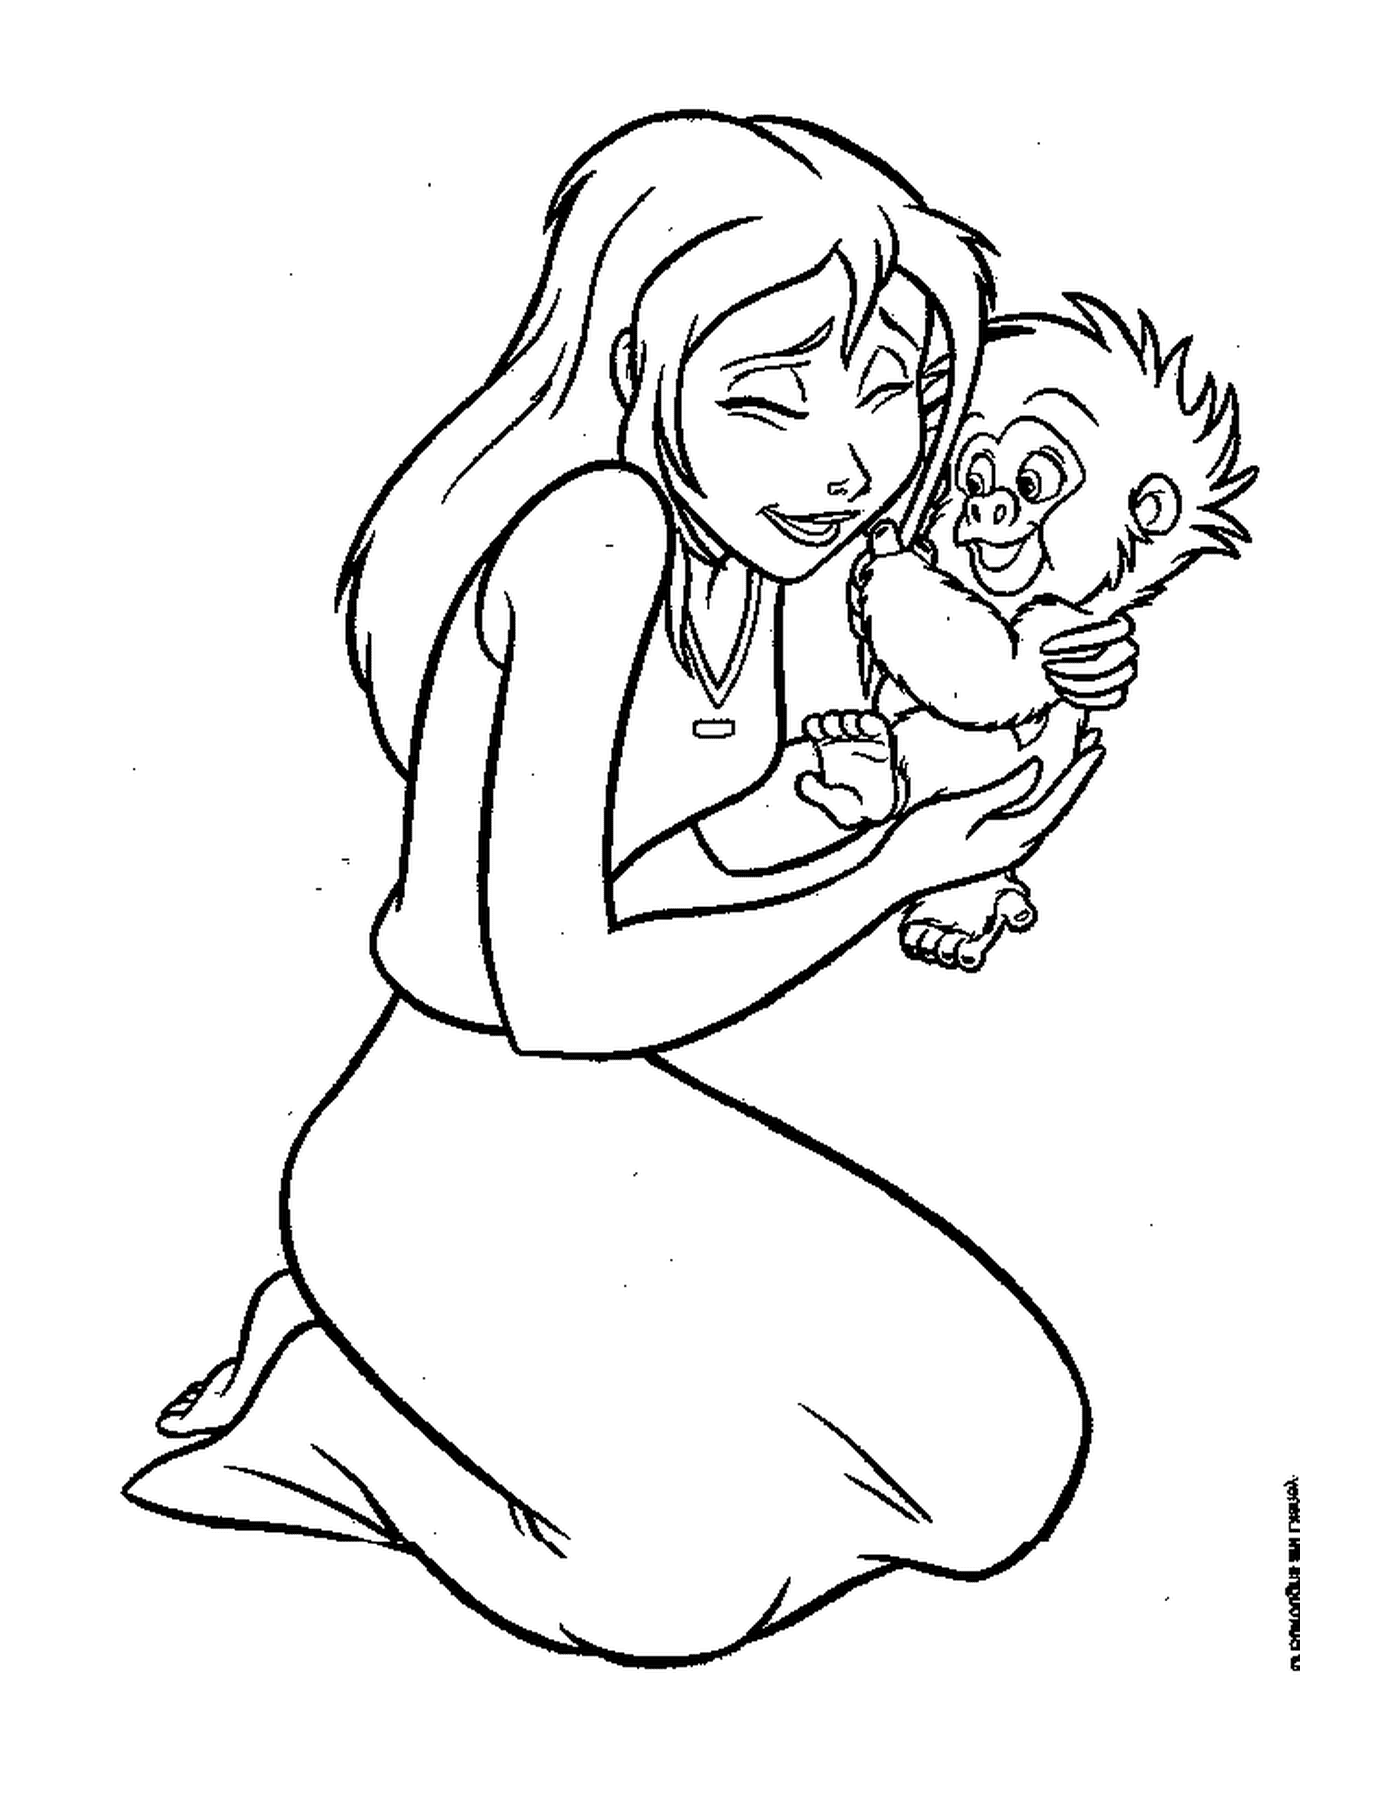  امرأة تحمل طفلاً رضيعاً قرداً بين ذراعيها 